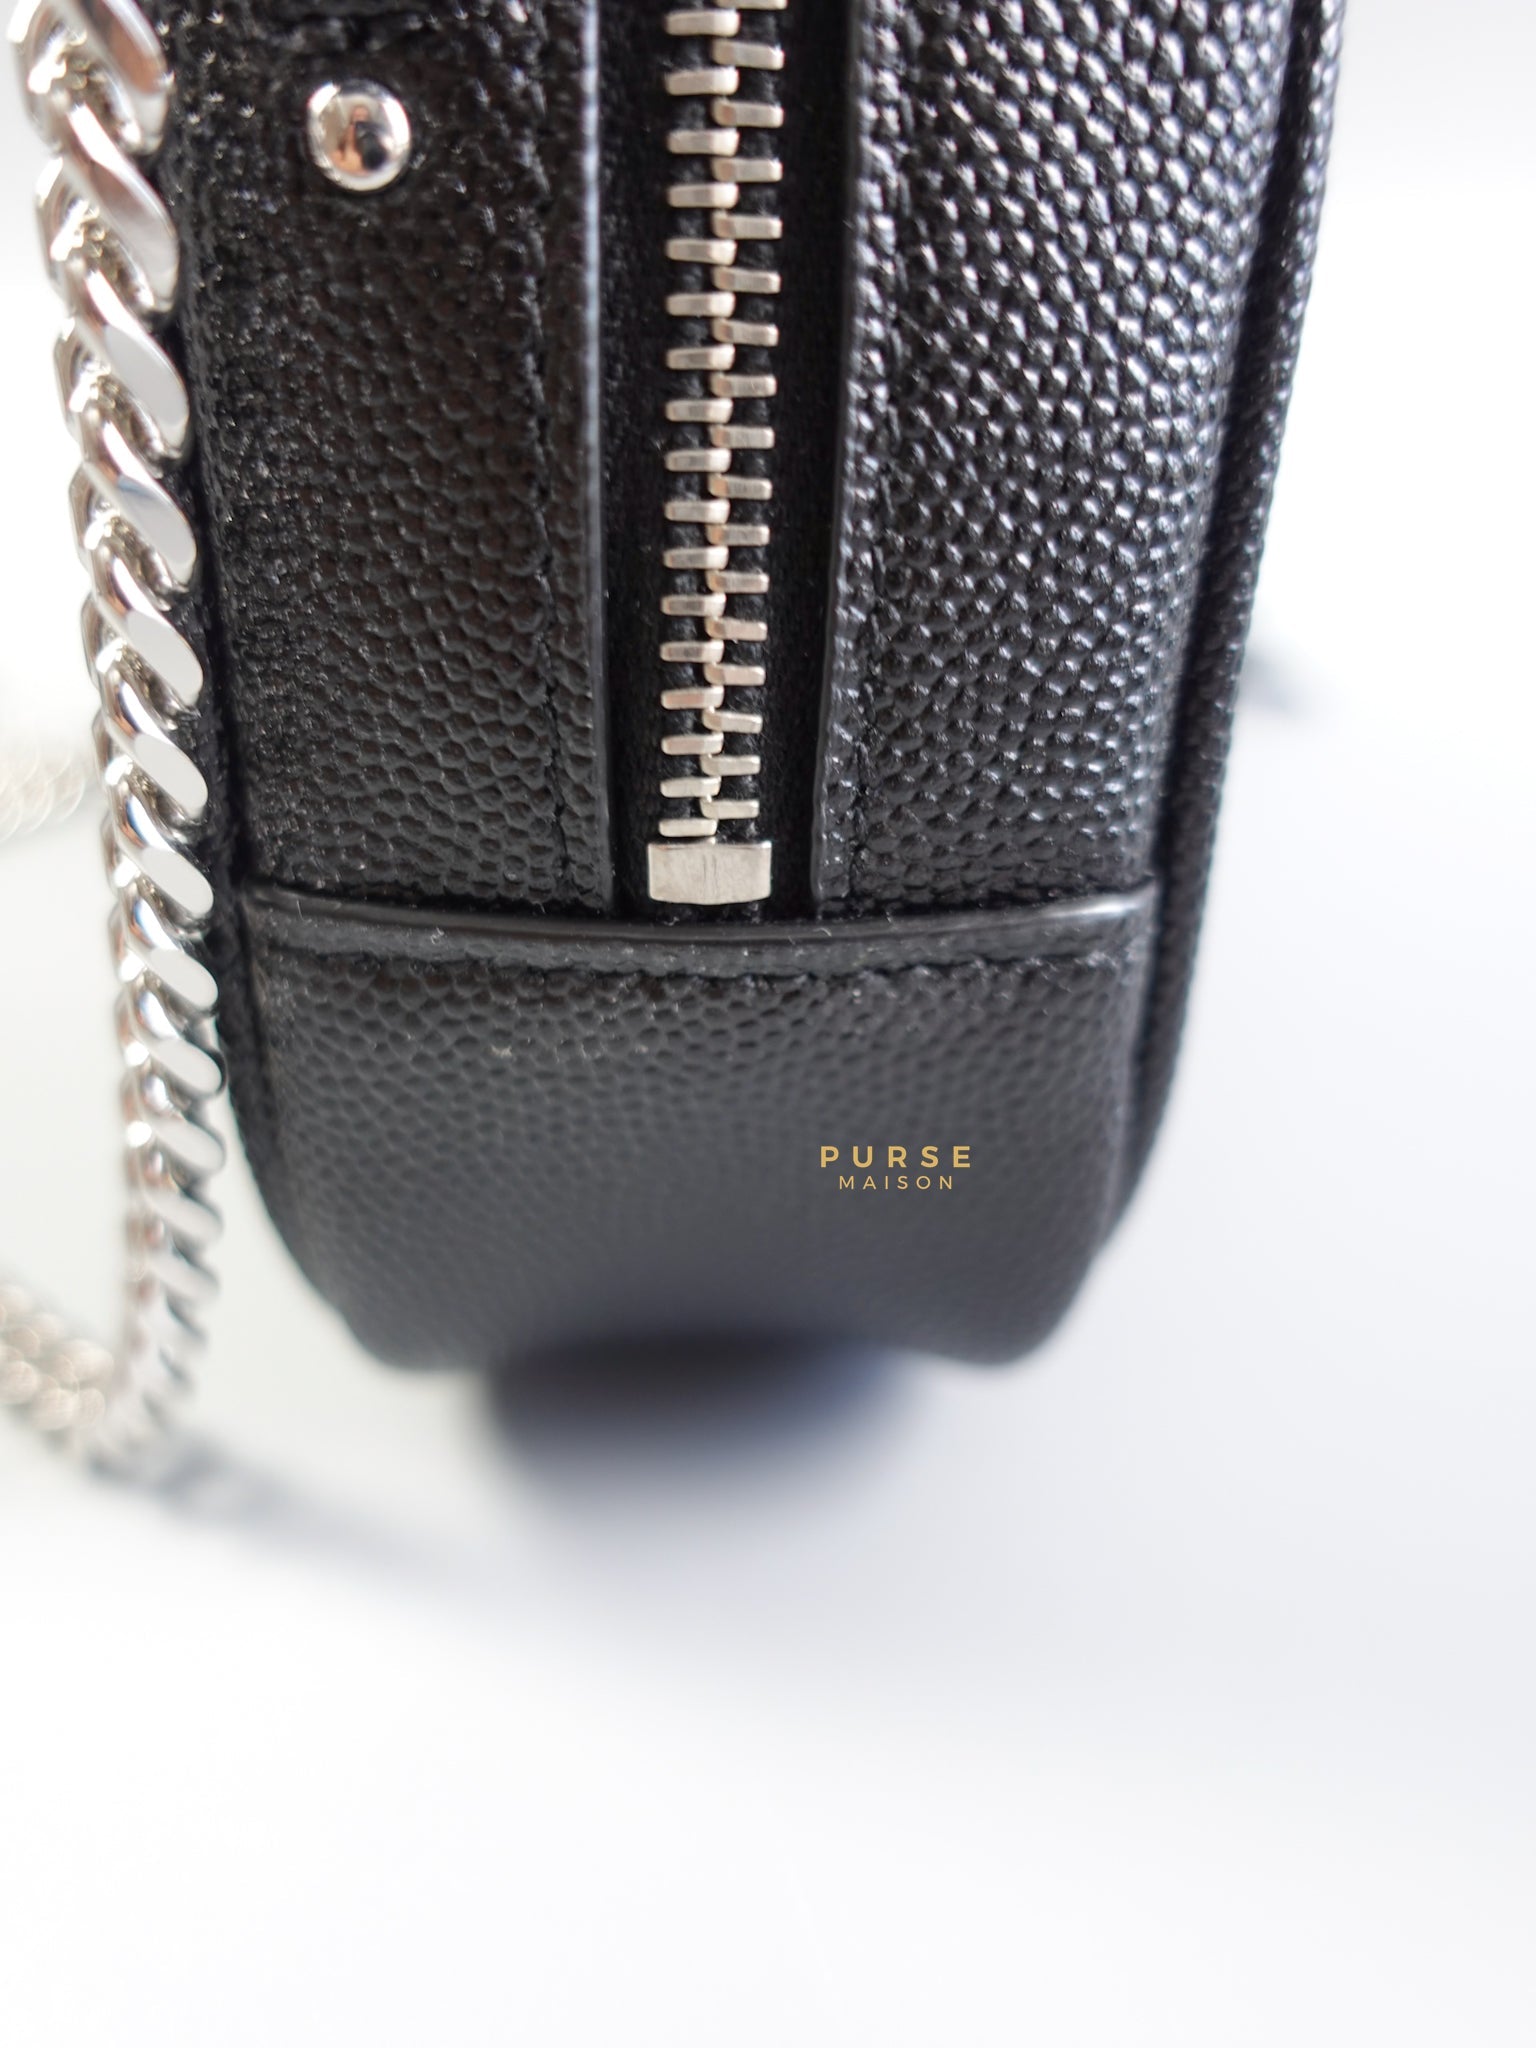 Mini Lou Camera Chain Bag Black in Silver Hardware | Purse Maison Luxury Bags Shop